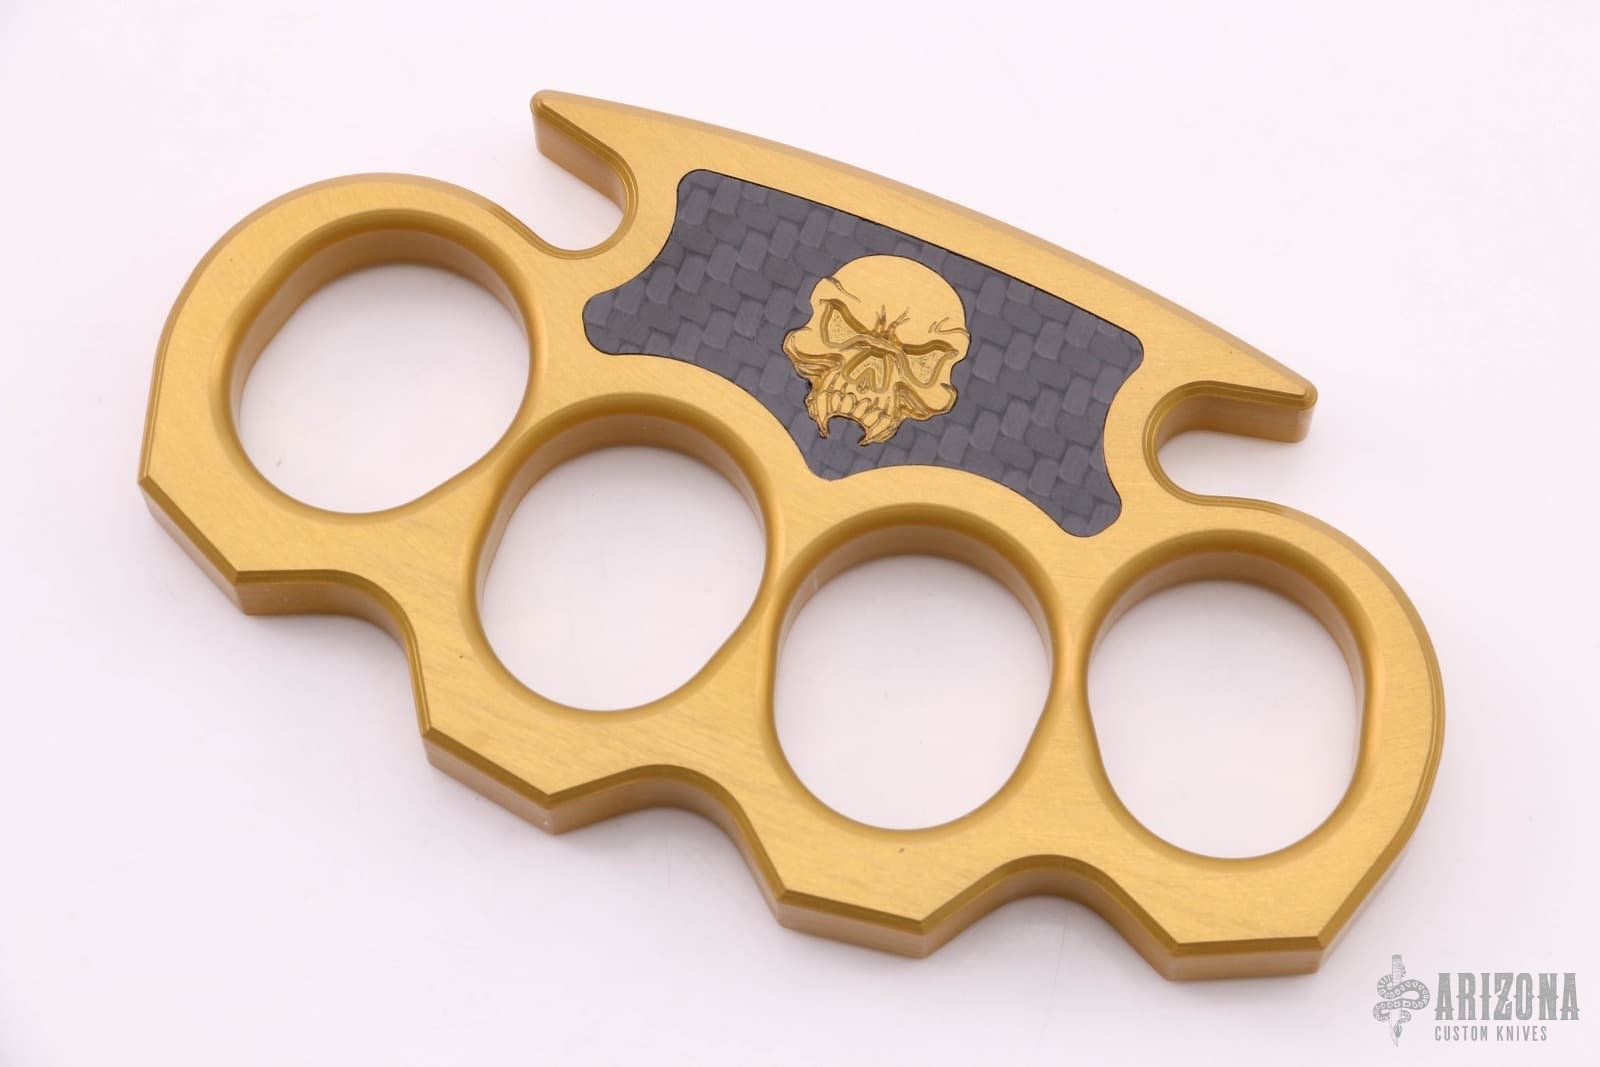 Custom Brass Knuckles - Arizona Custom Knives